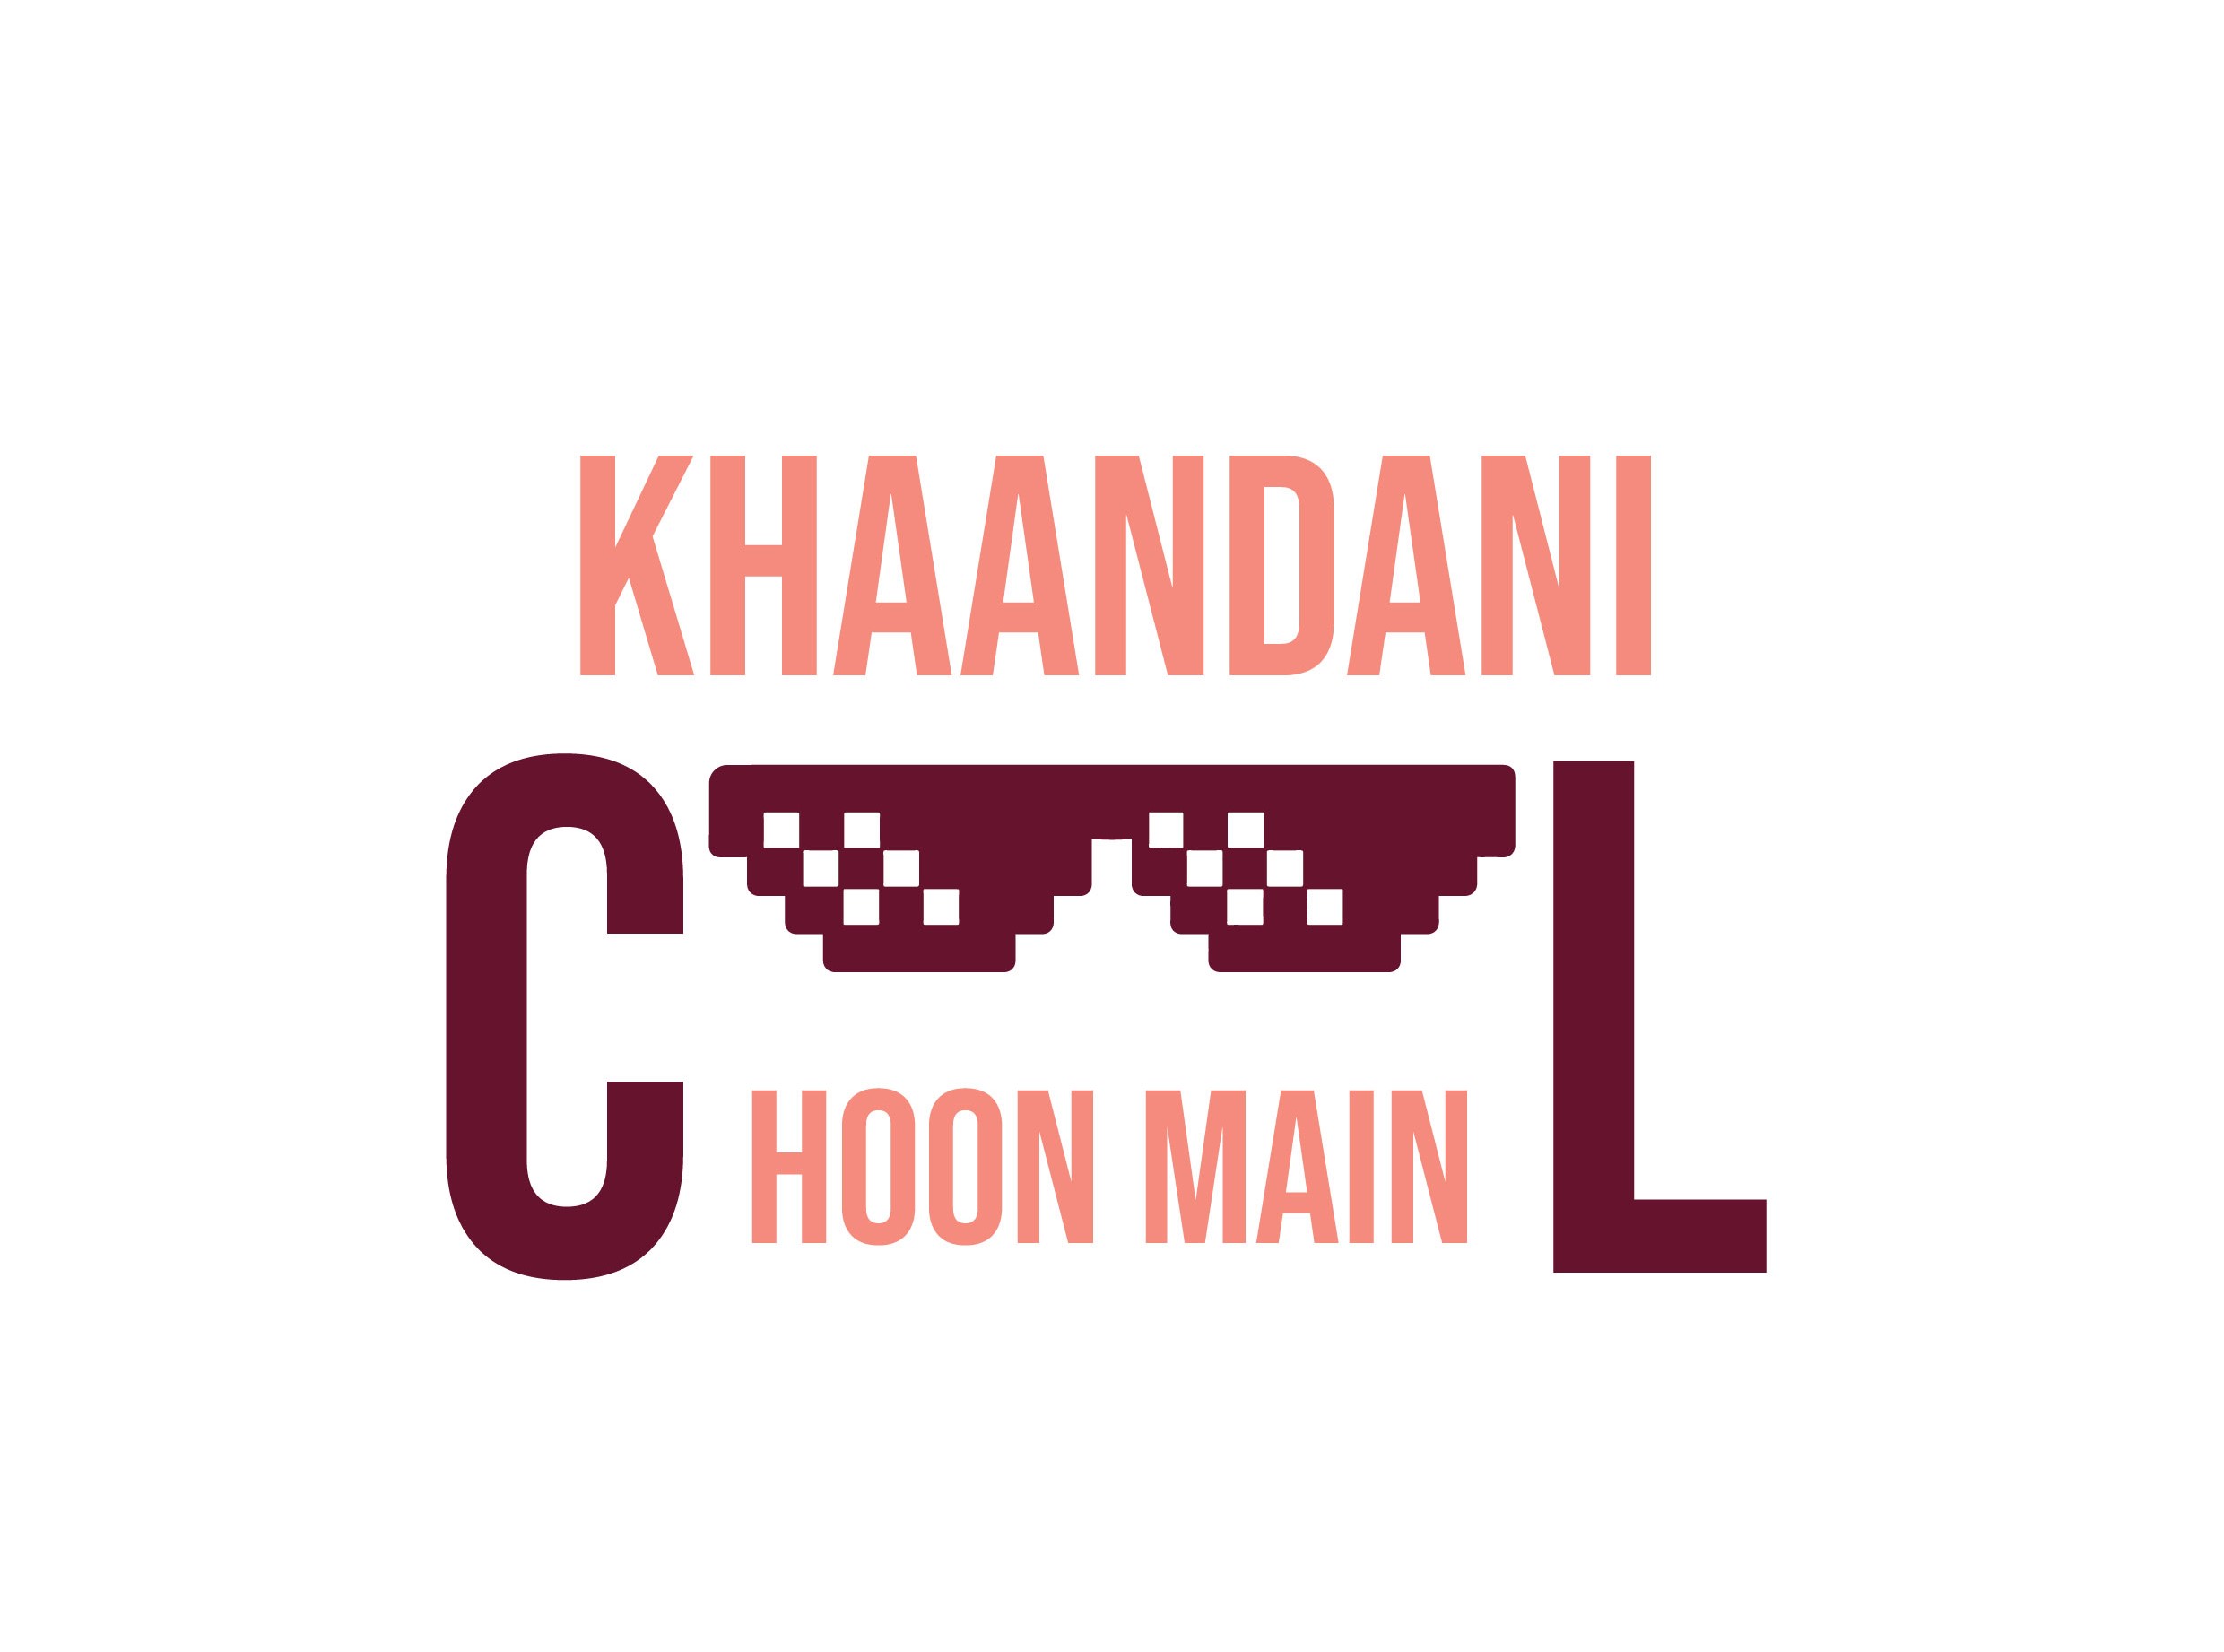 Khaandani-Image.jpg